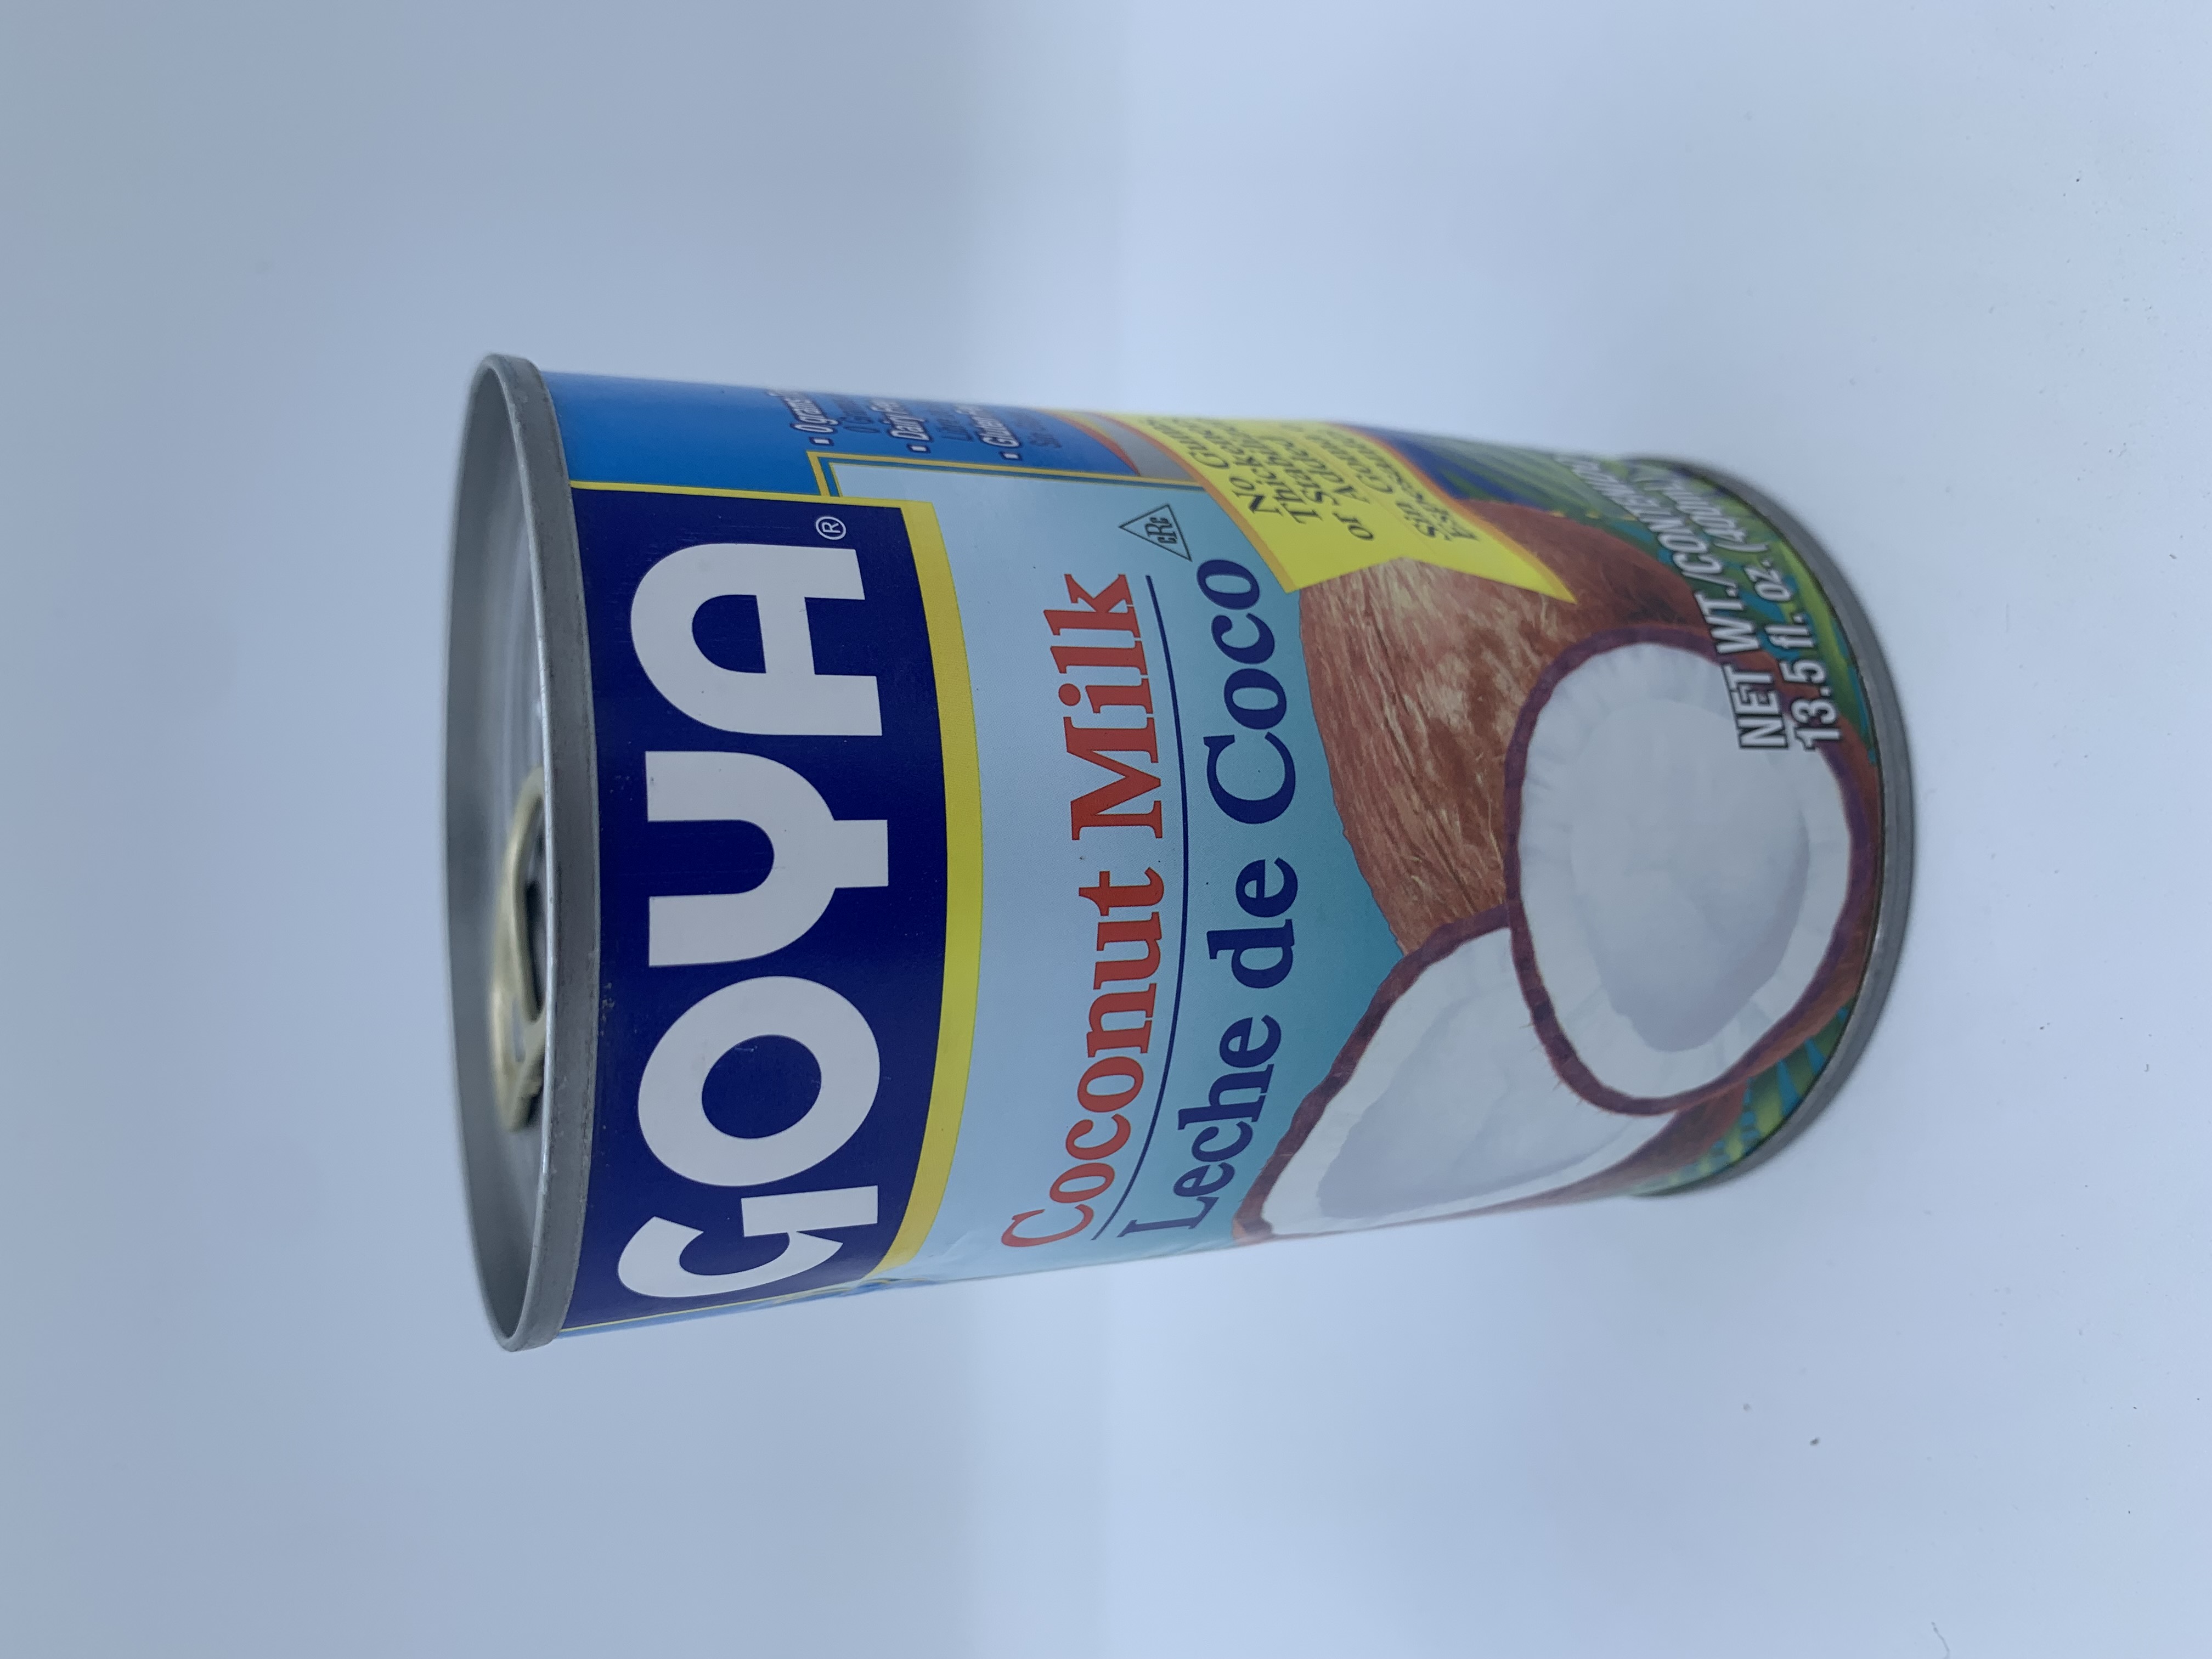 Goya Coconut Milk